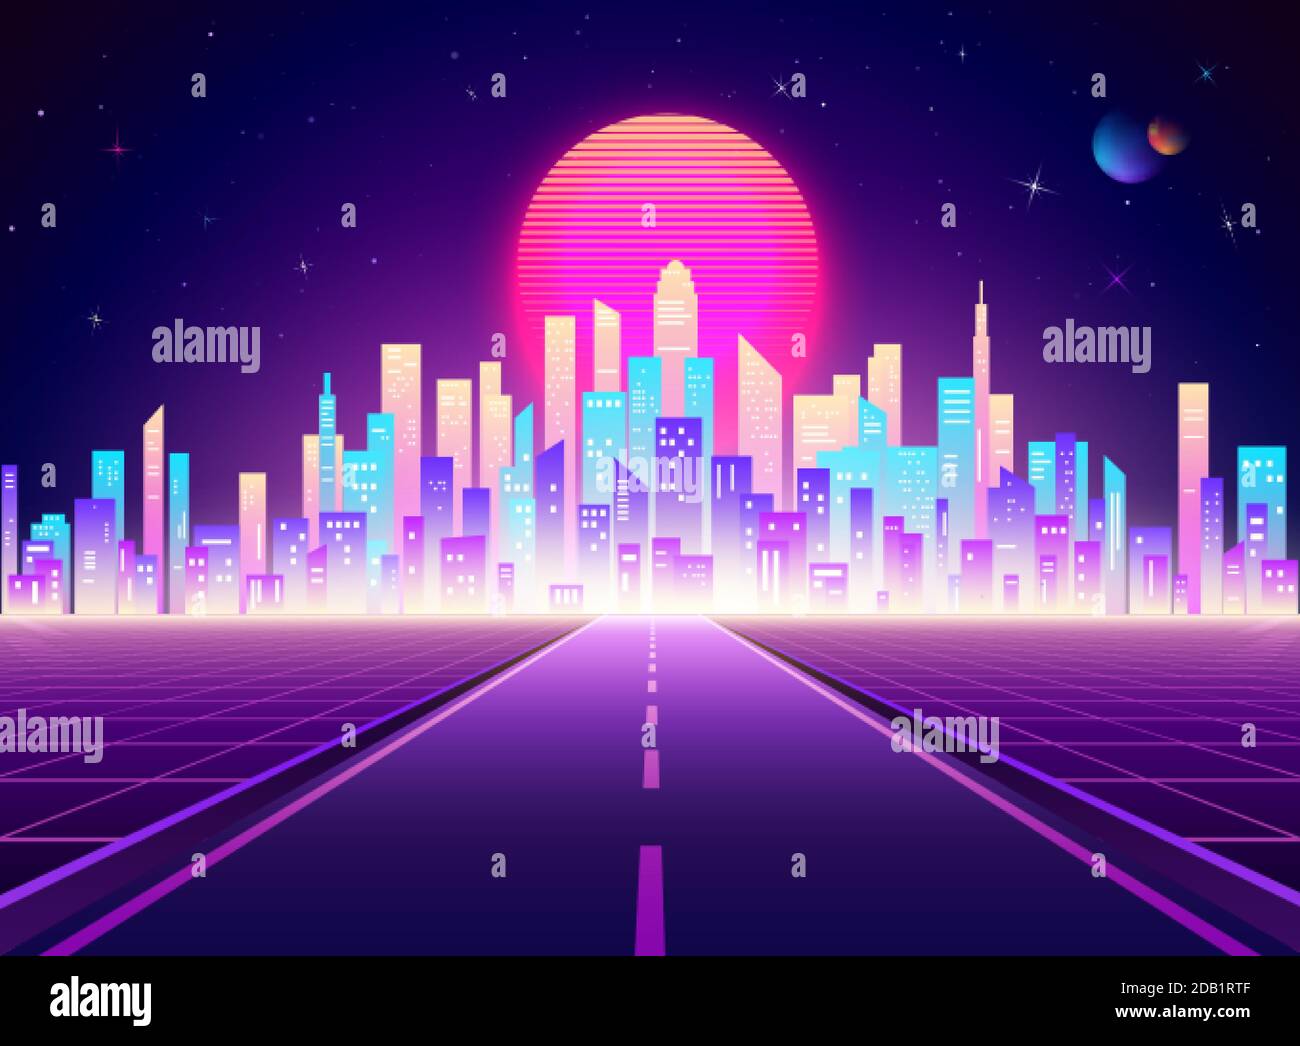 Neon retro city landscape. Highway to Cyberpunk futuristic town. Sci-fi background abstract digital architecture. Vector illustration Stock Vector